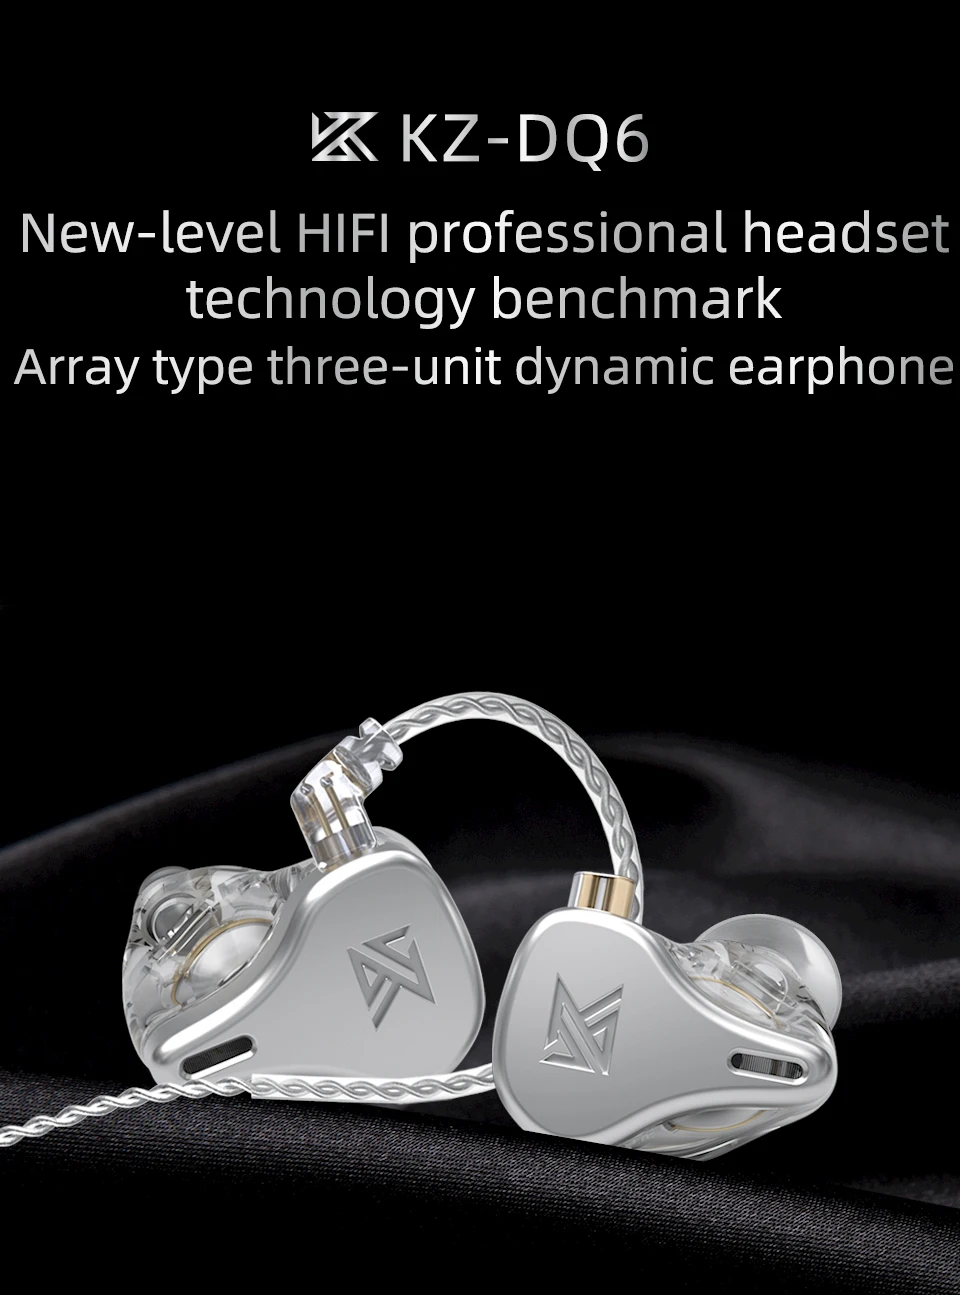 Kz earphone kz dq6 3dd bass hifi earbuds in-ear monitor noise cancelling music sport earphones kz zsx zs10 pro asx edx zsn pro x